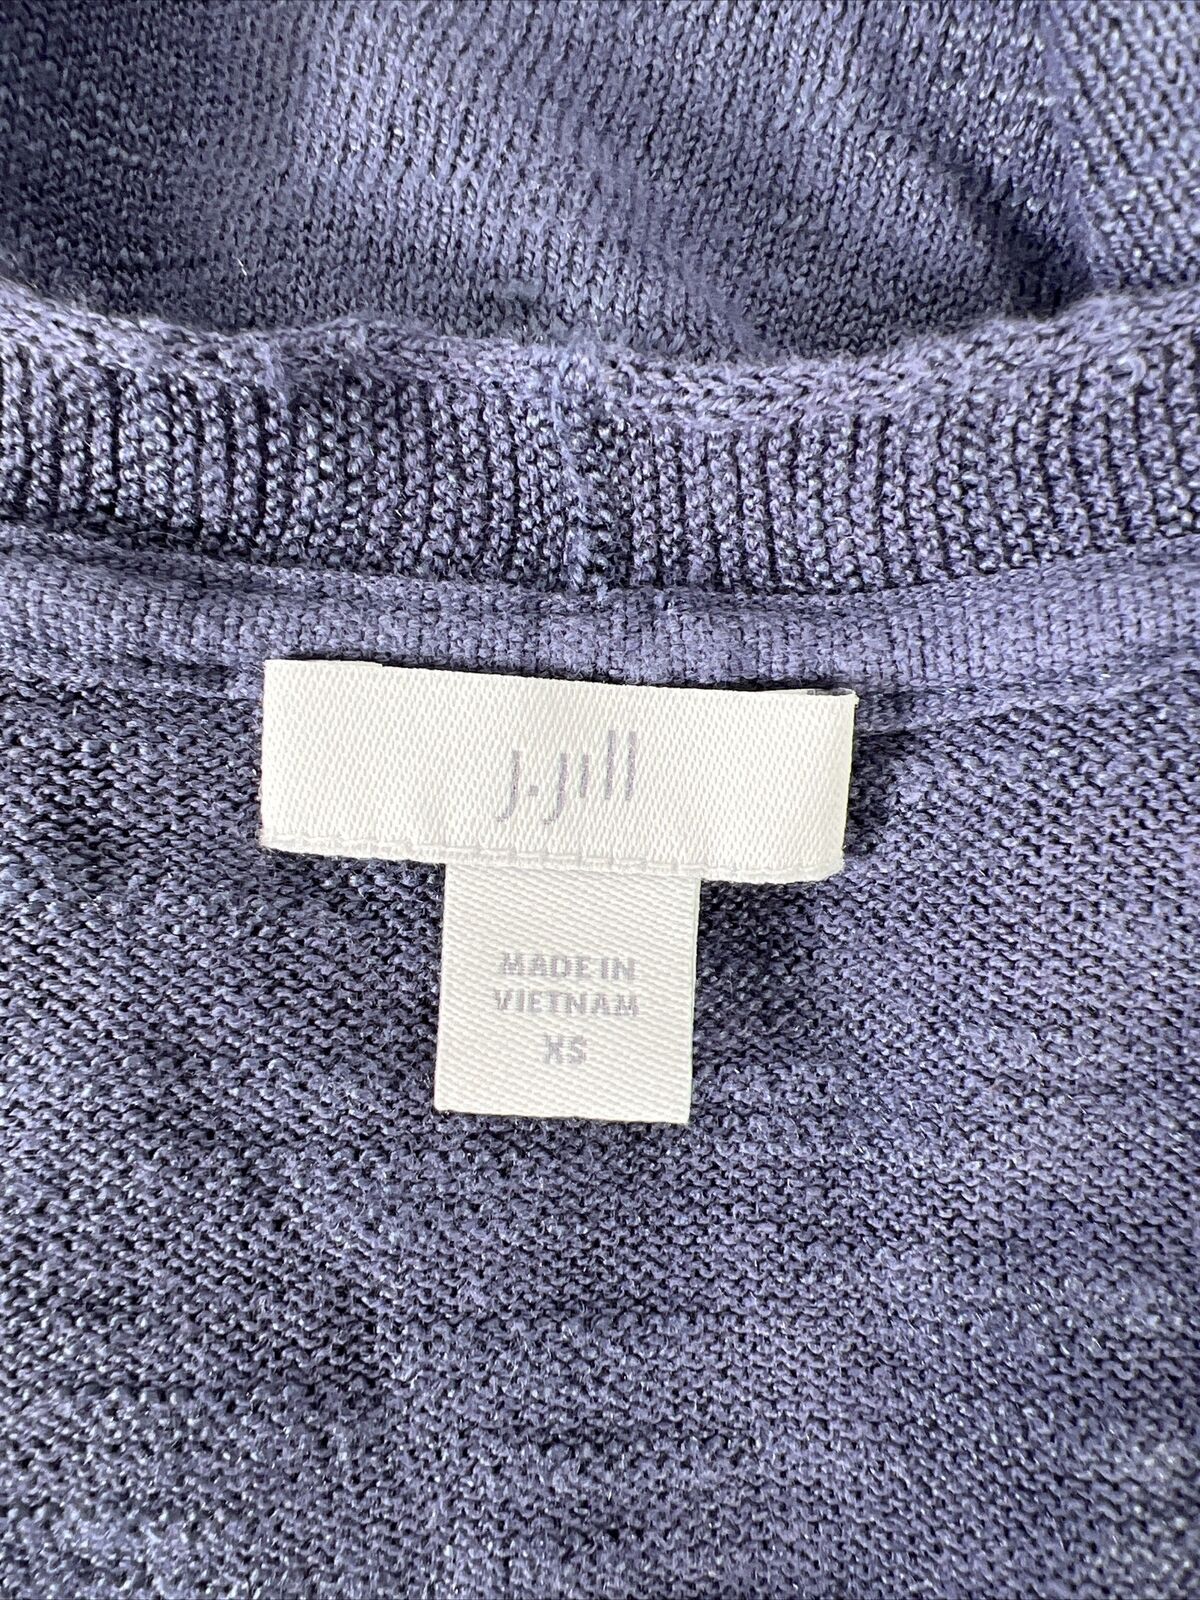 J.Jill Women's Blue Long Sleeve Thin Knit V-Neck Sweater - XS